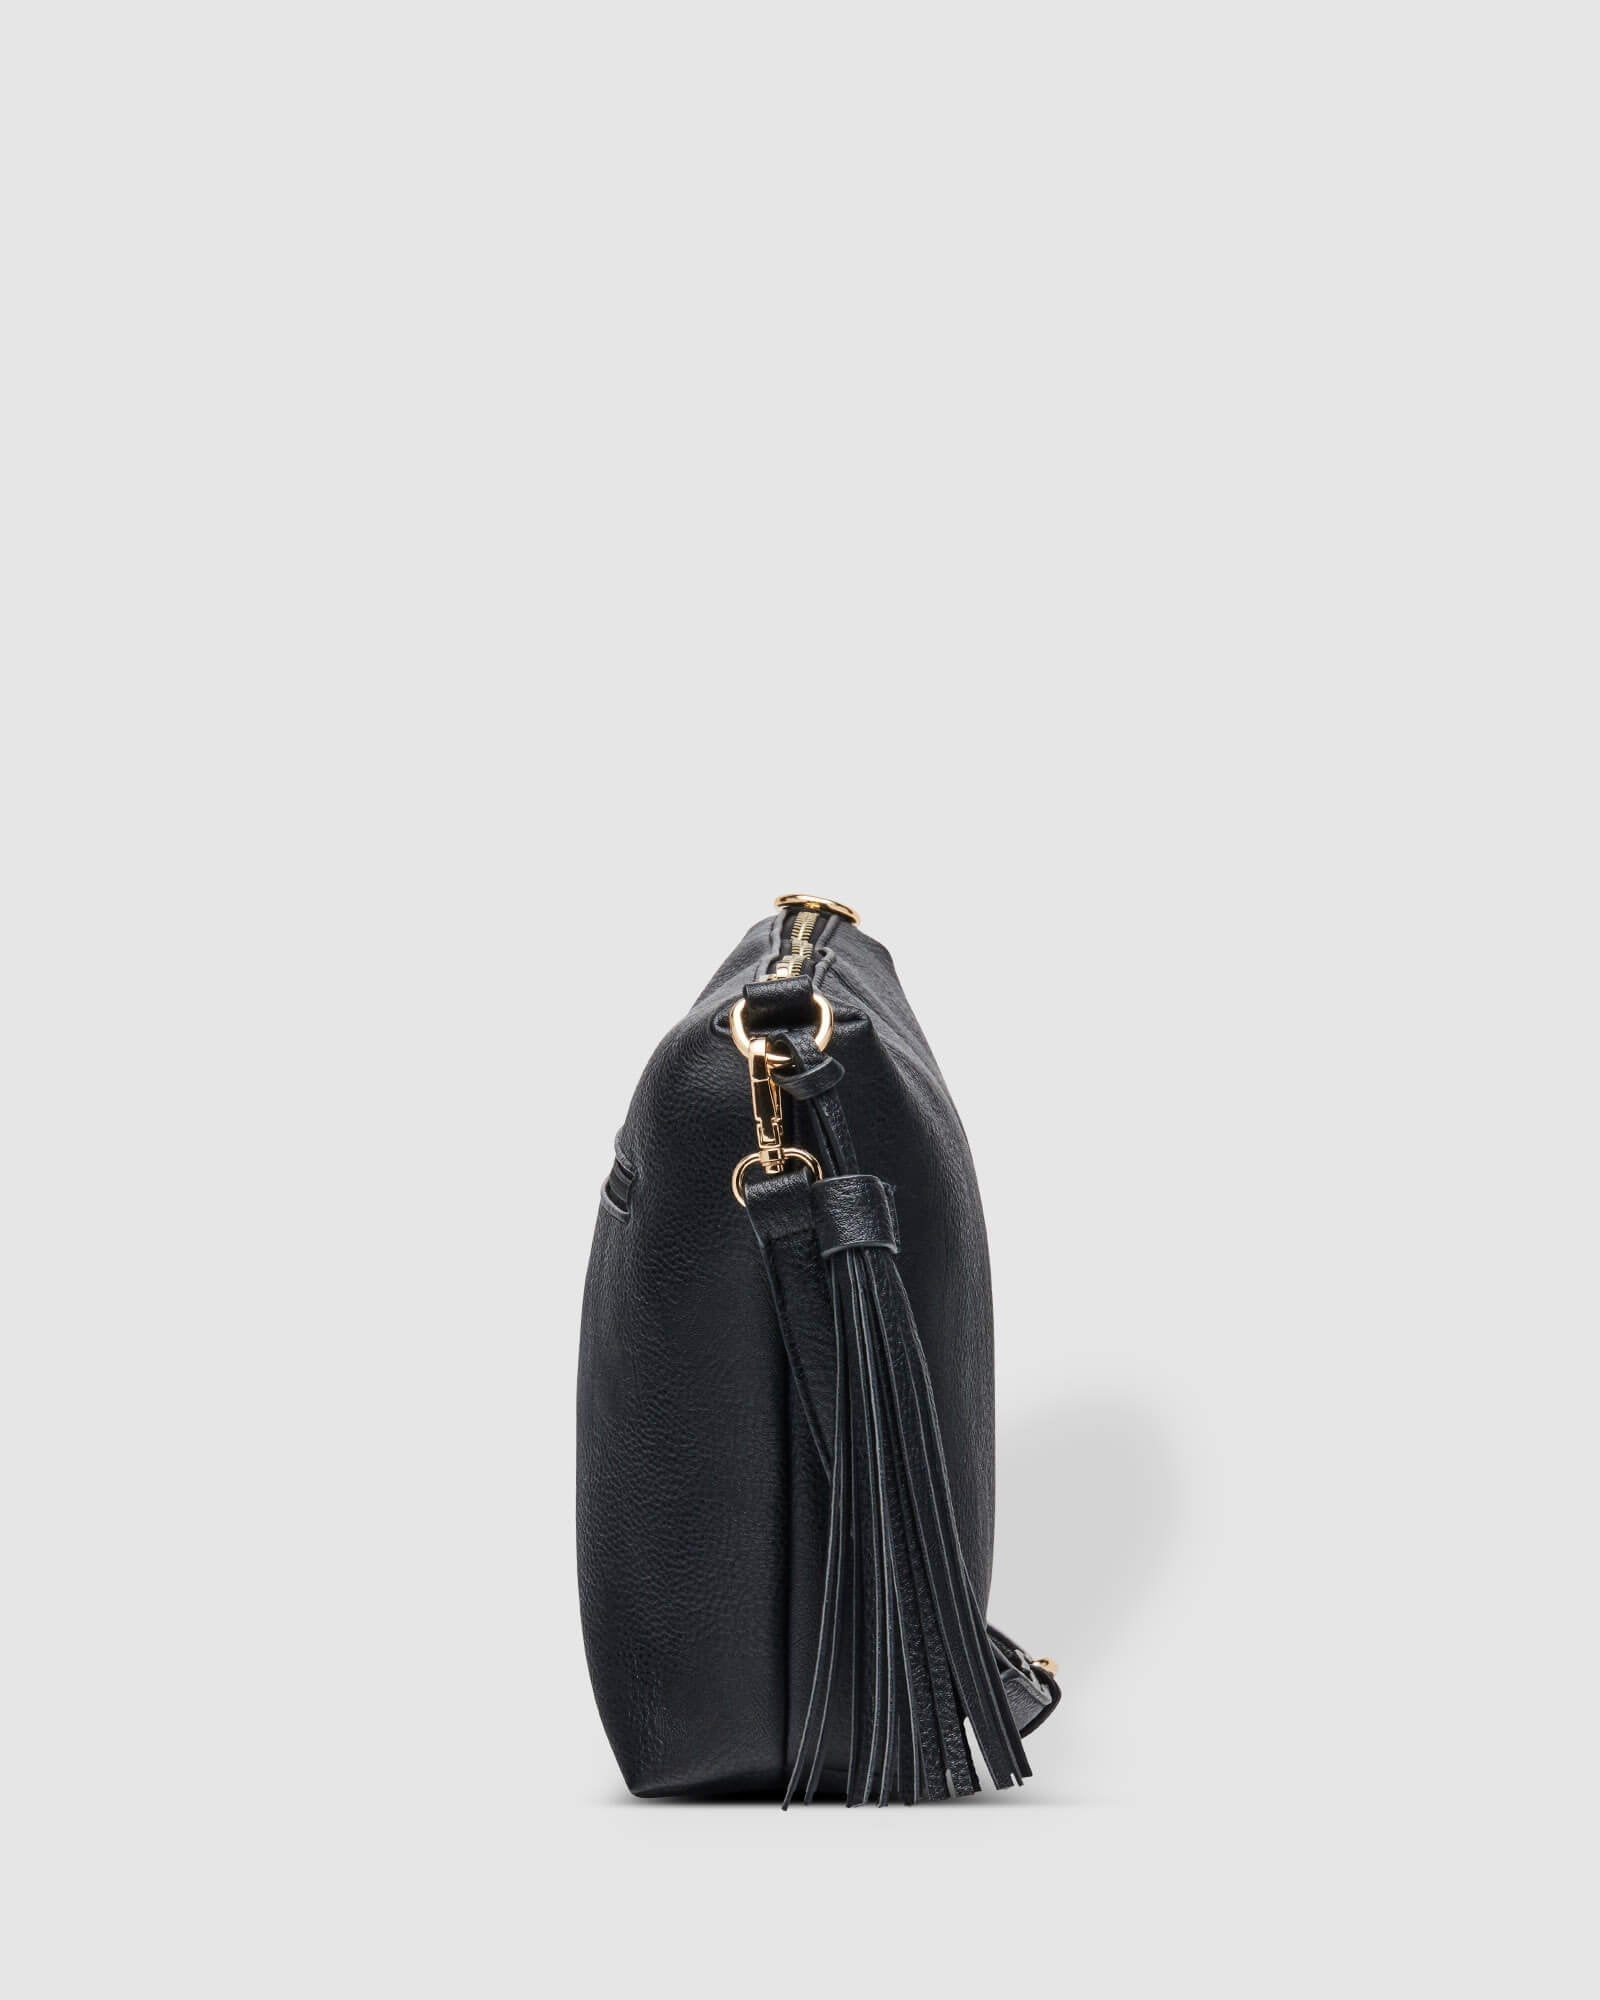 Louenhide Daisy Crossbody Bag - Black Accessories - Other Accessories - Handbags & Wallets by Louenhide | Grace the Boutique